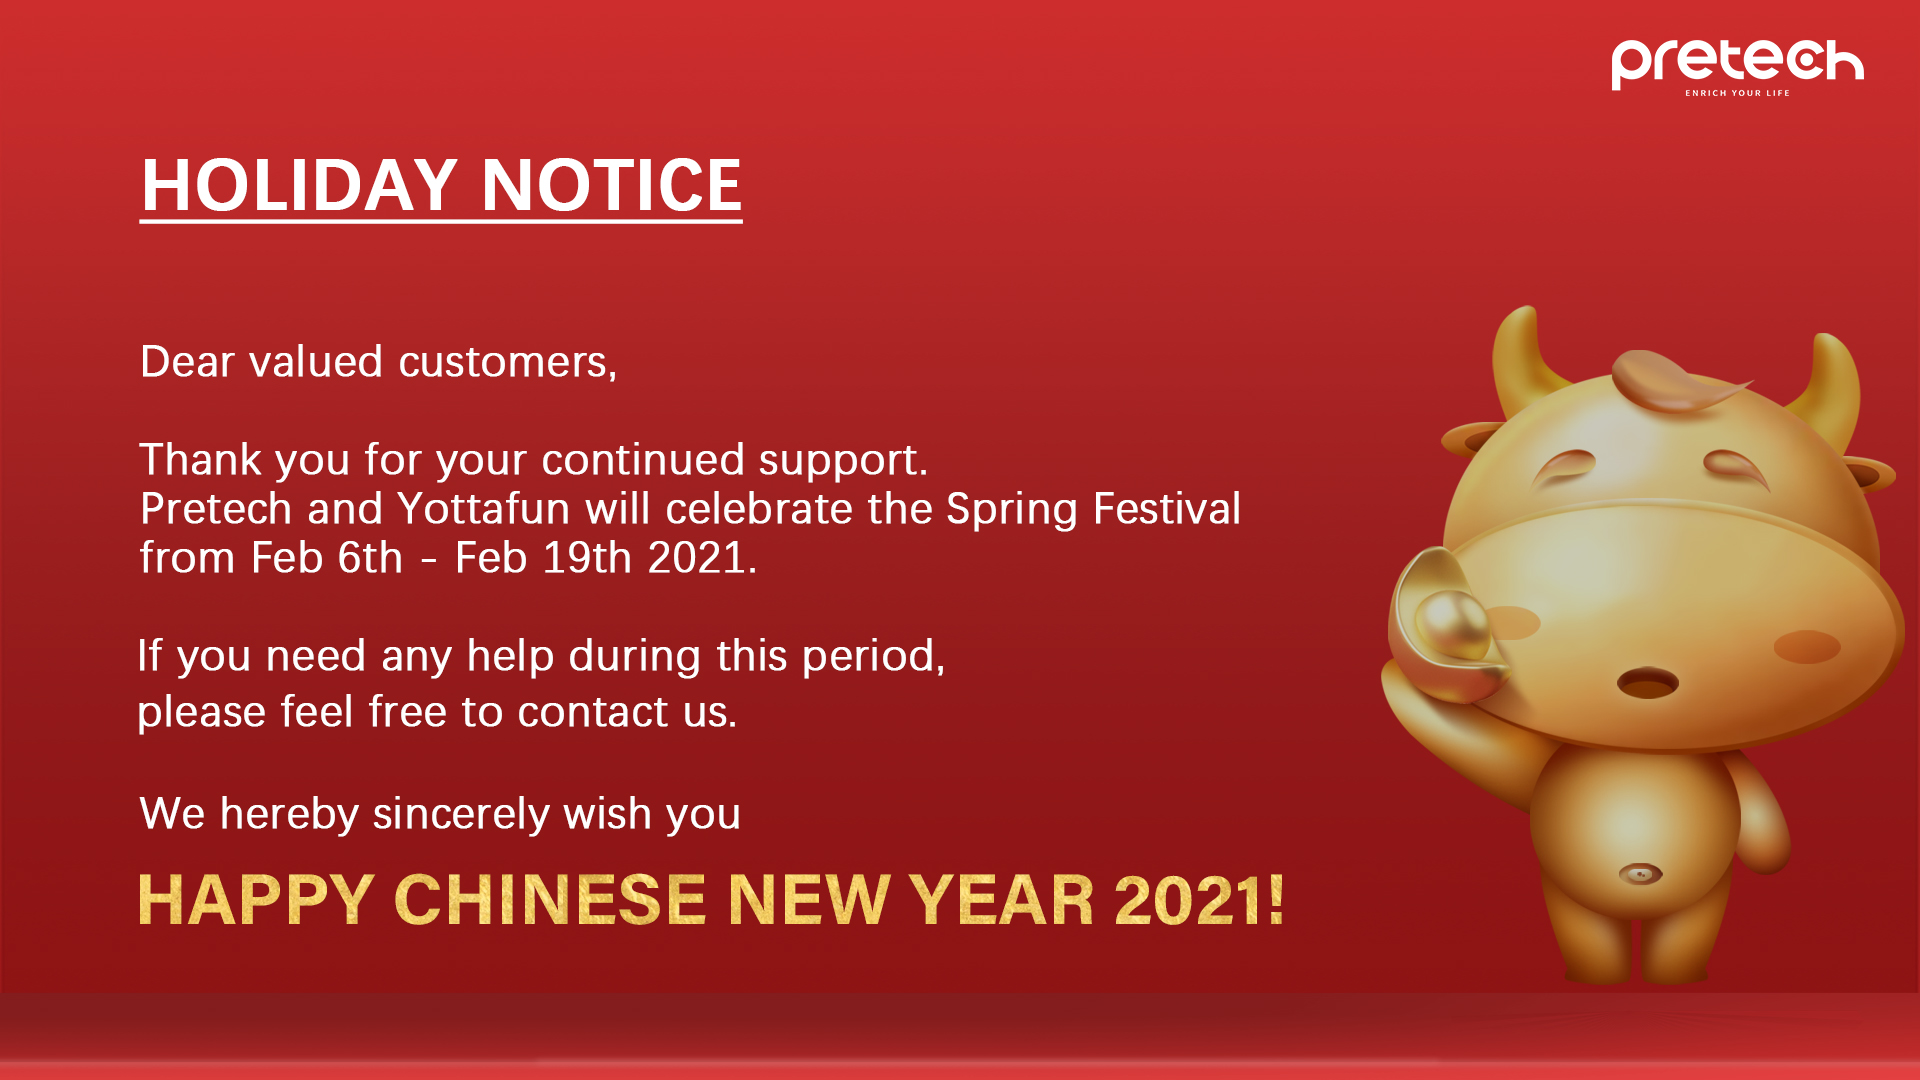 Pretech Spring Festival Holiday Notice 2021.jpg